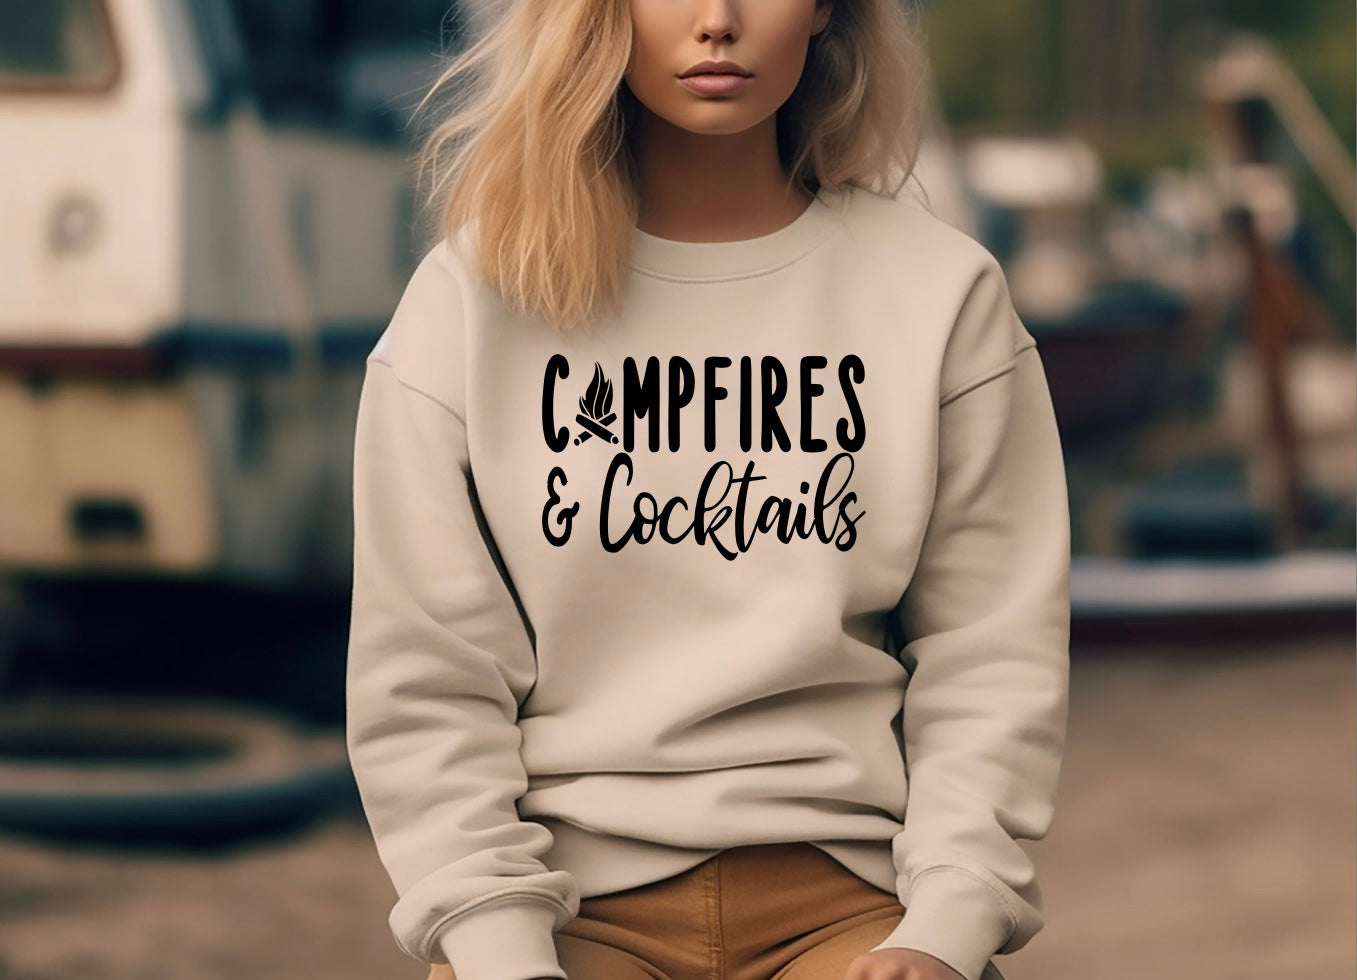 Campfires and cocktails unisex Gildan crewneck sweatshirt in sand